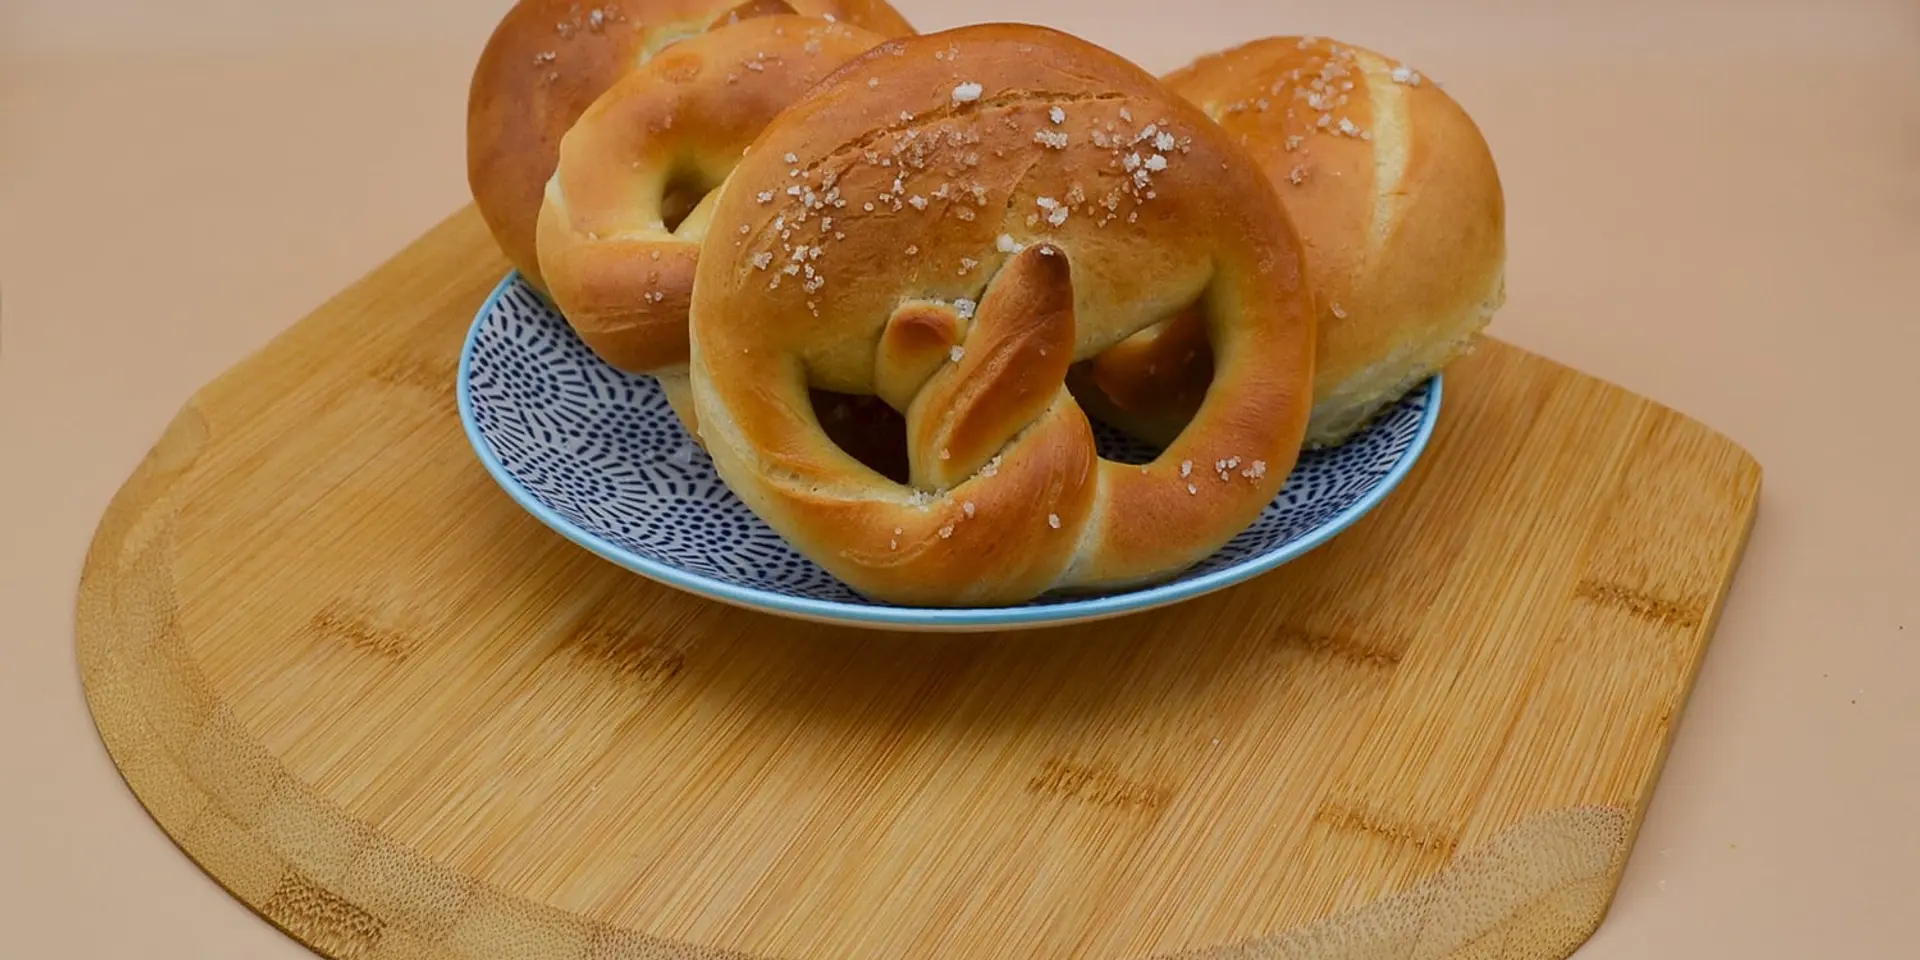 How to make pretzel bread